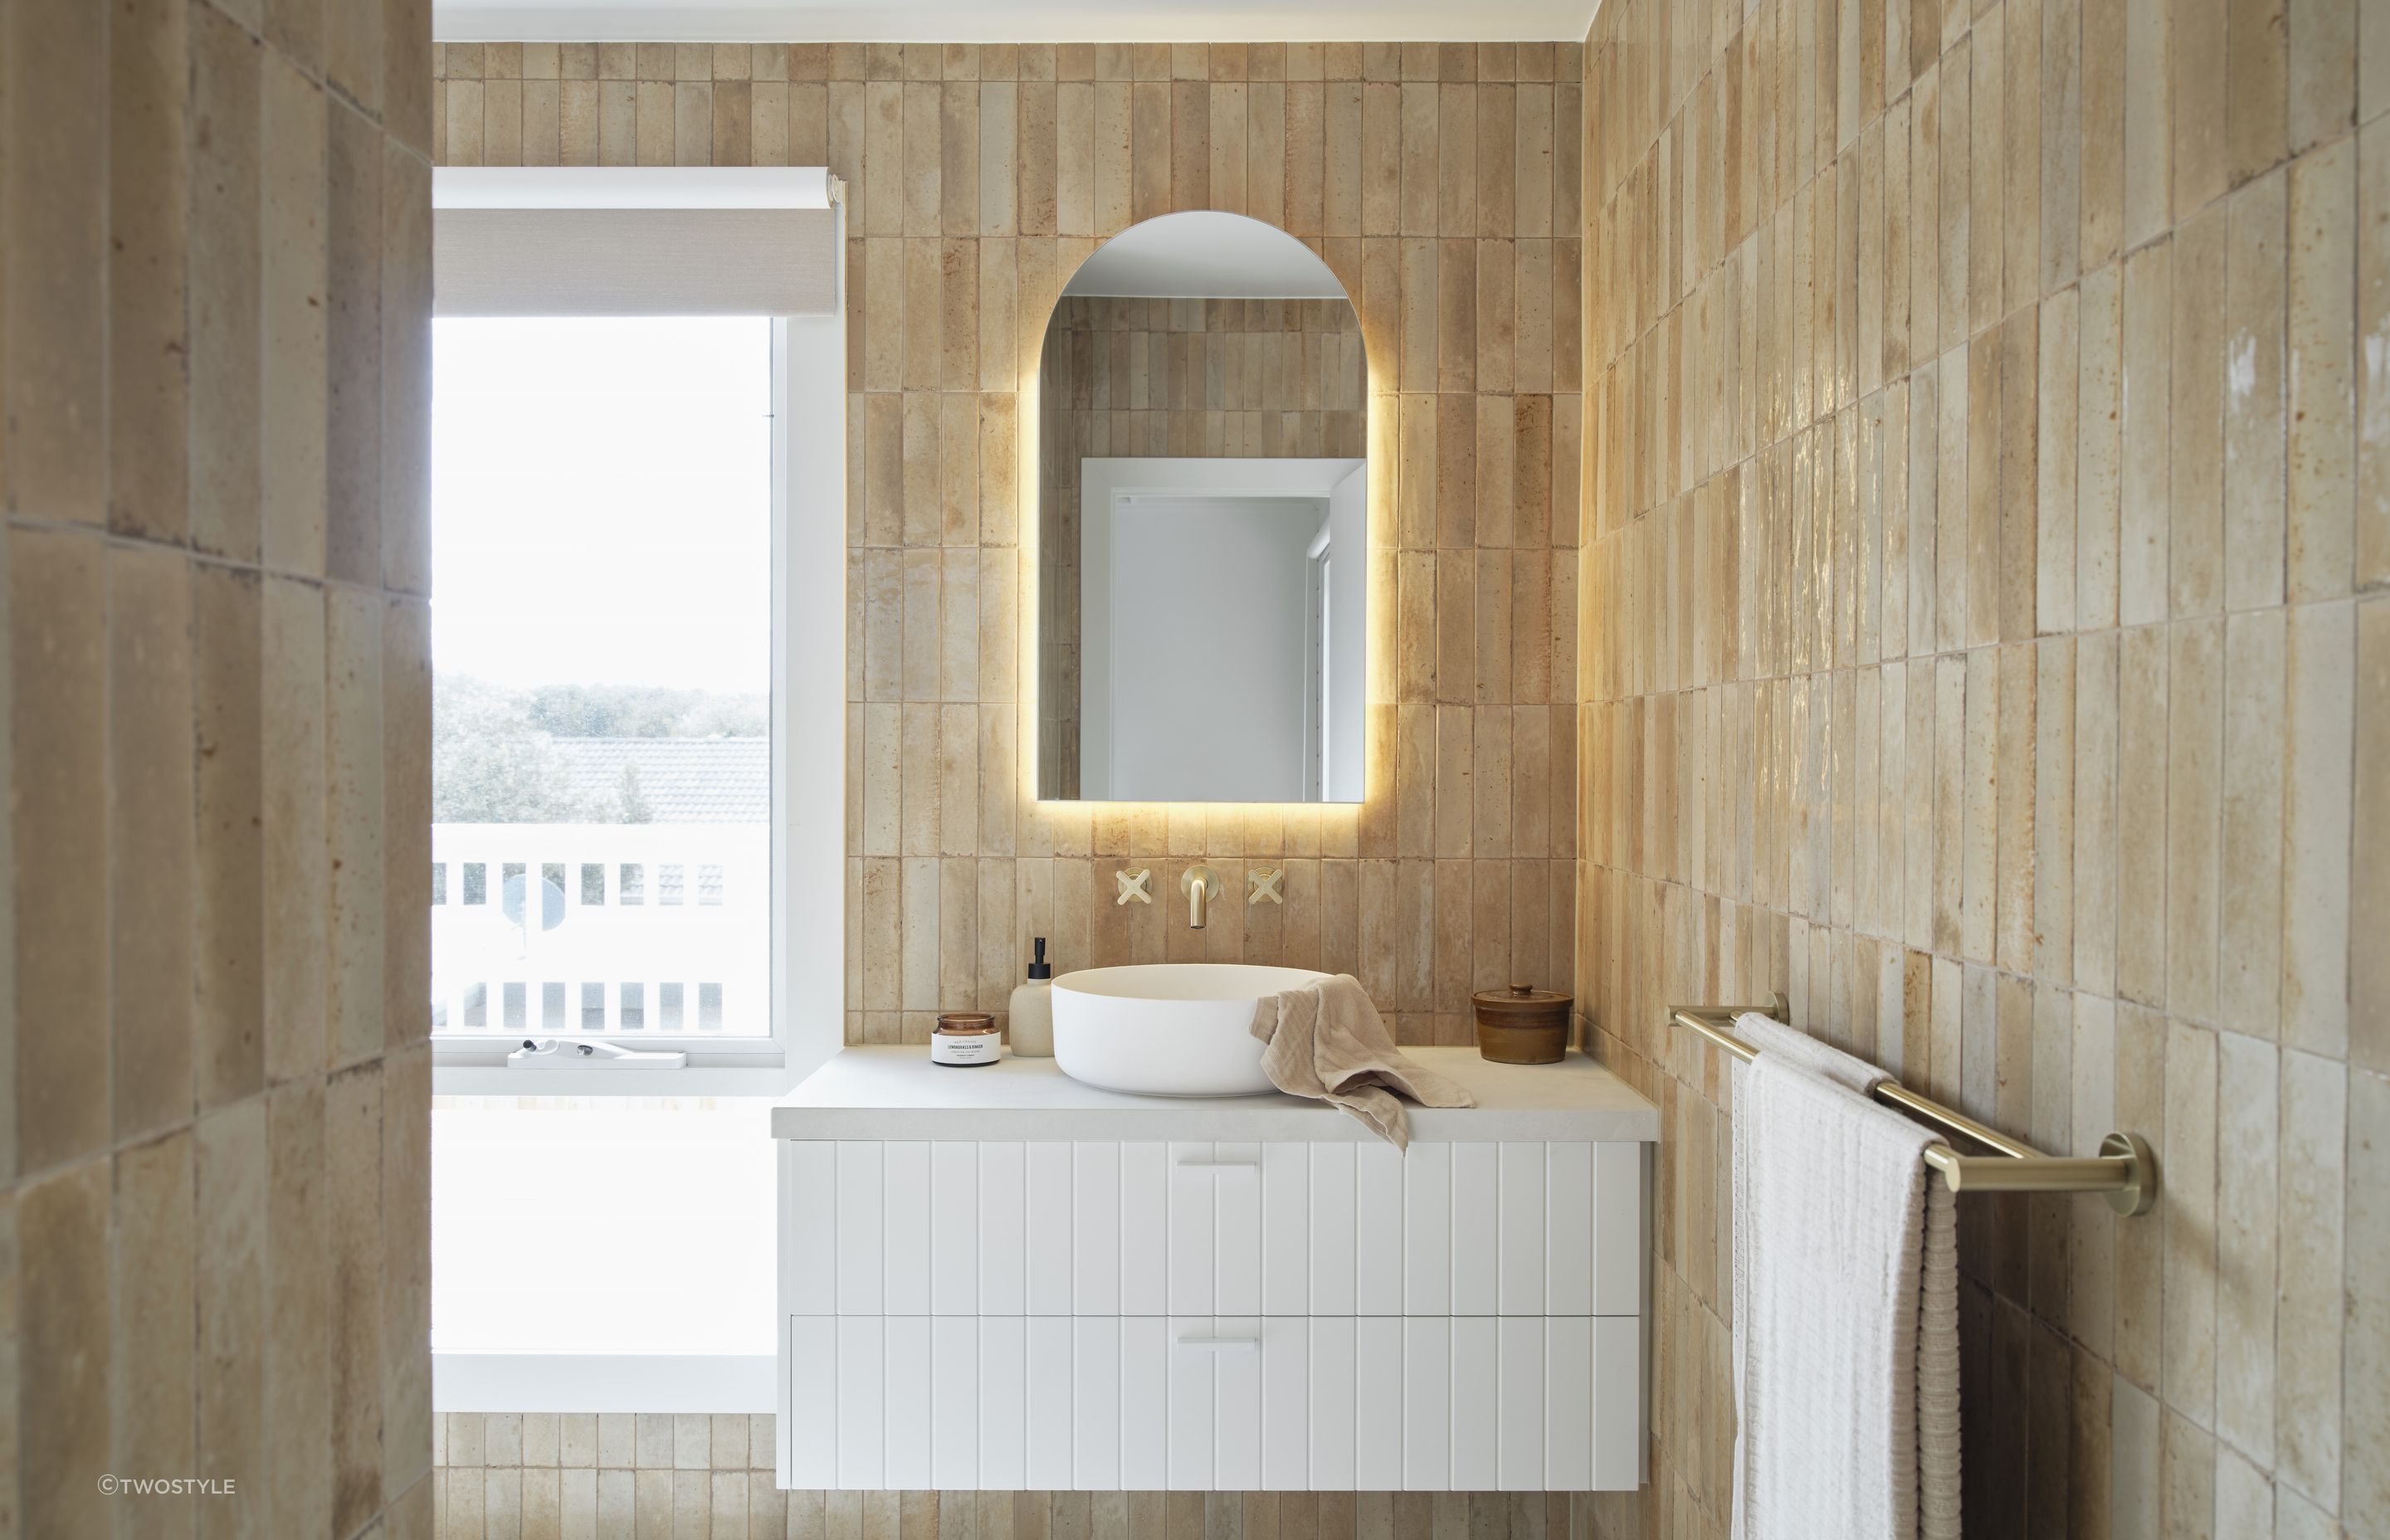 Brick coastal tiles set the foundation for many coastal style bathrooms.